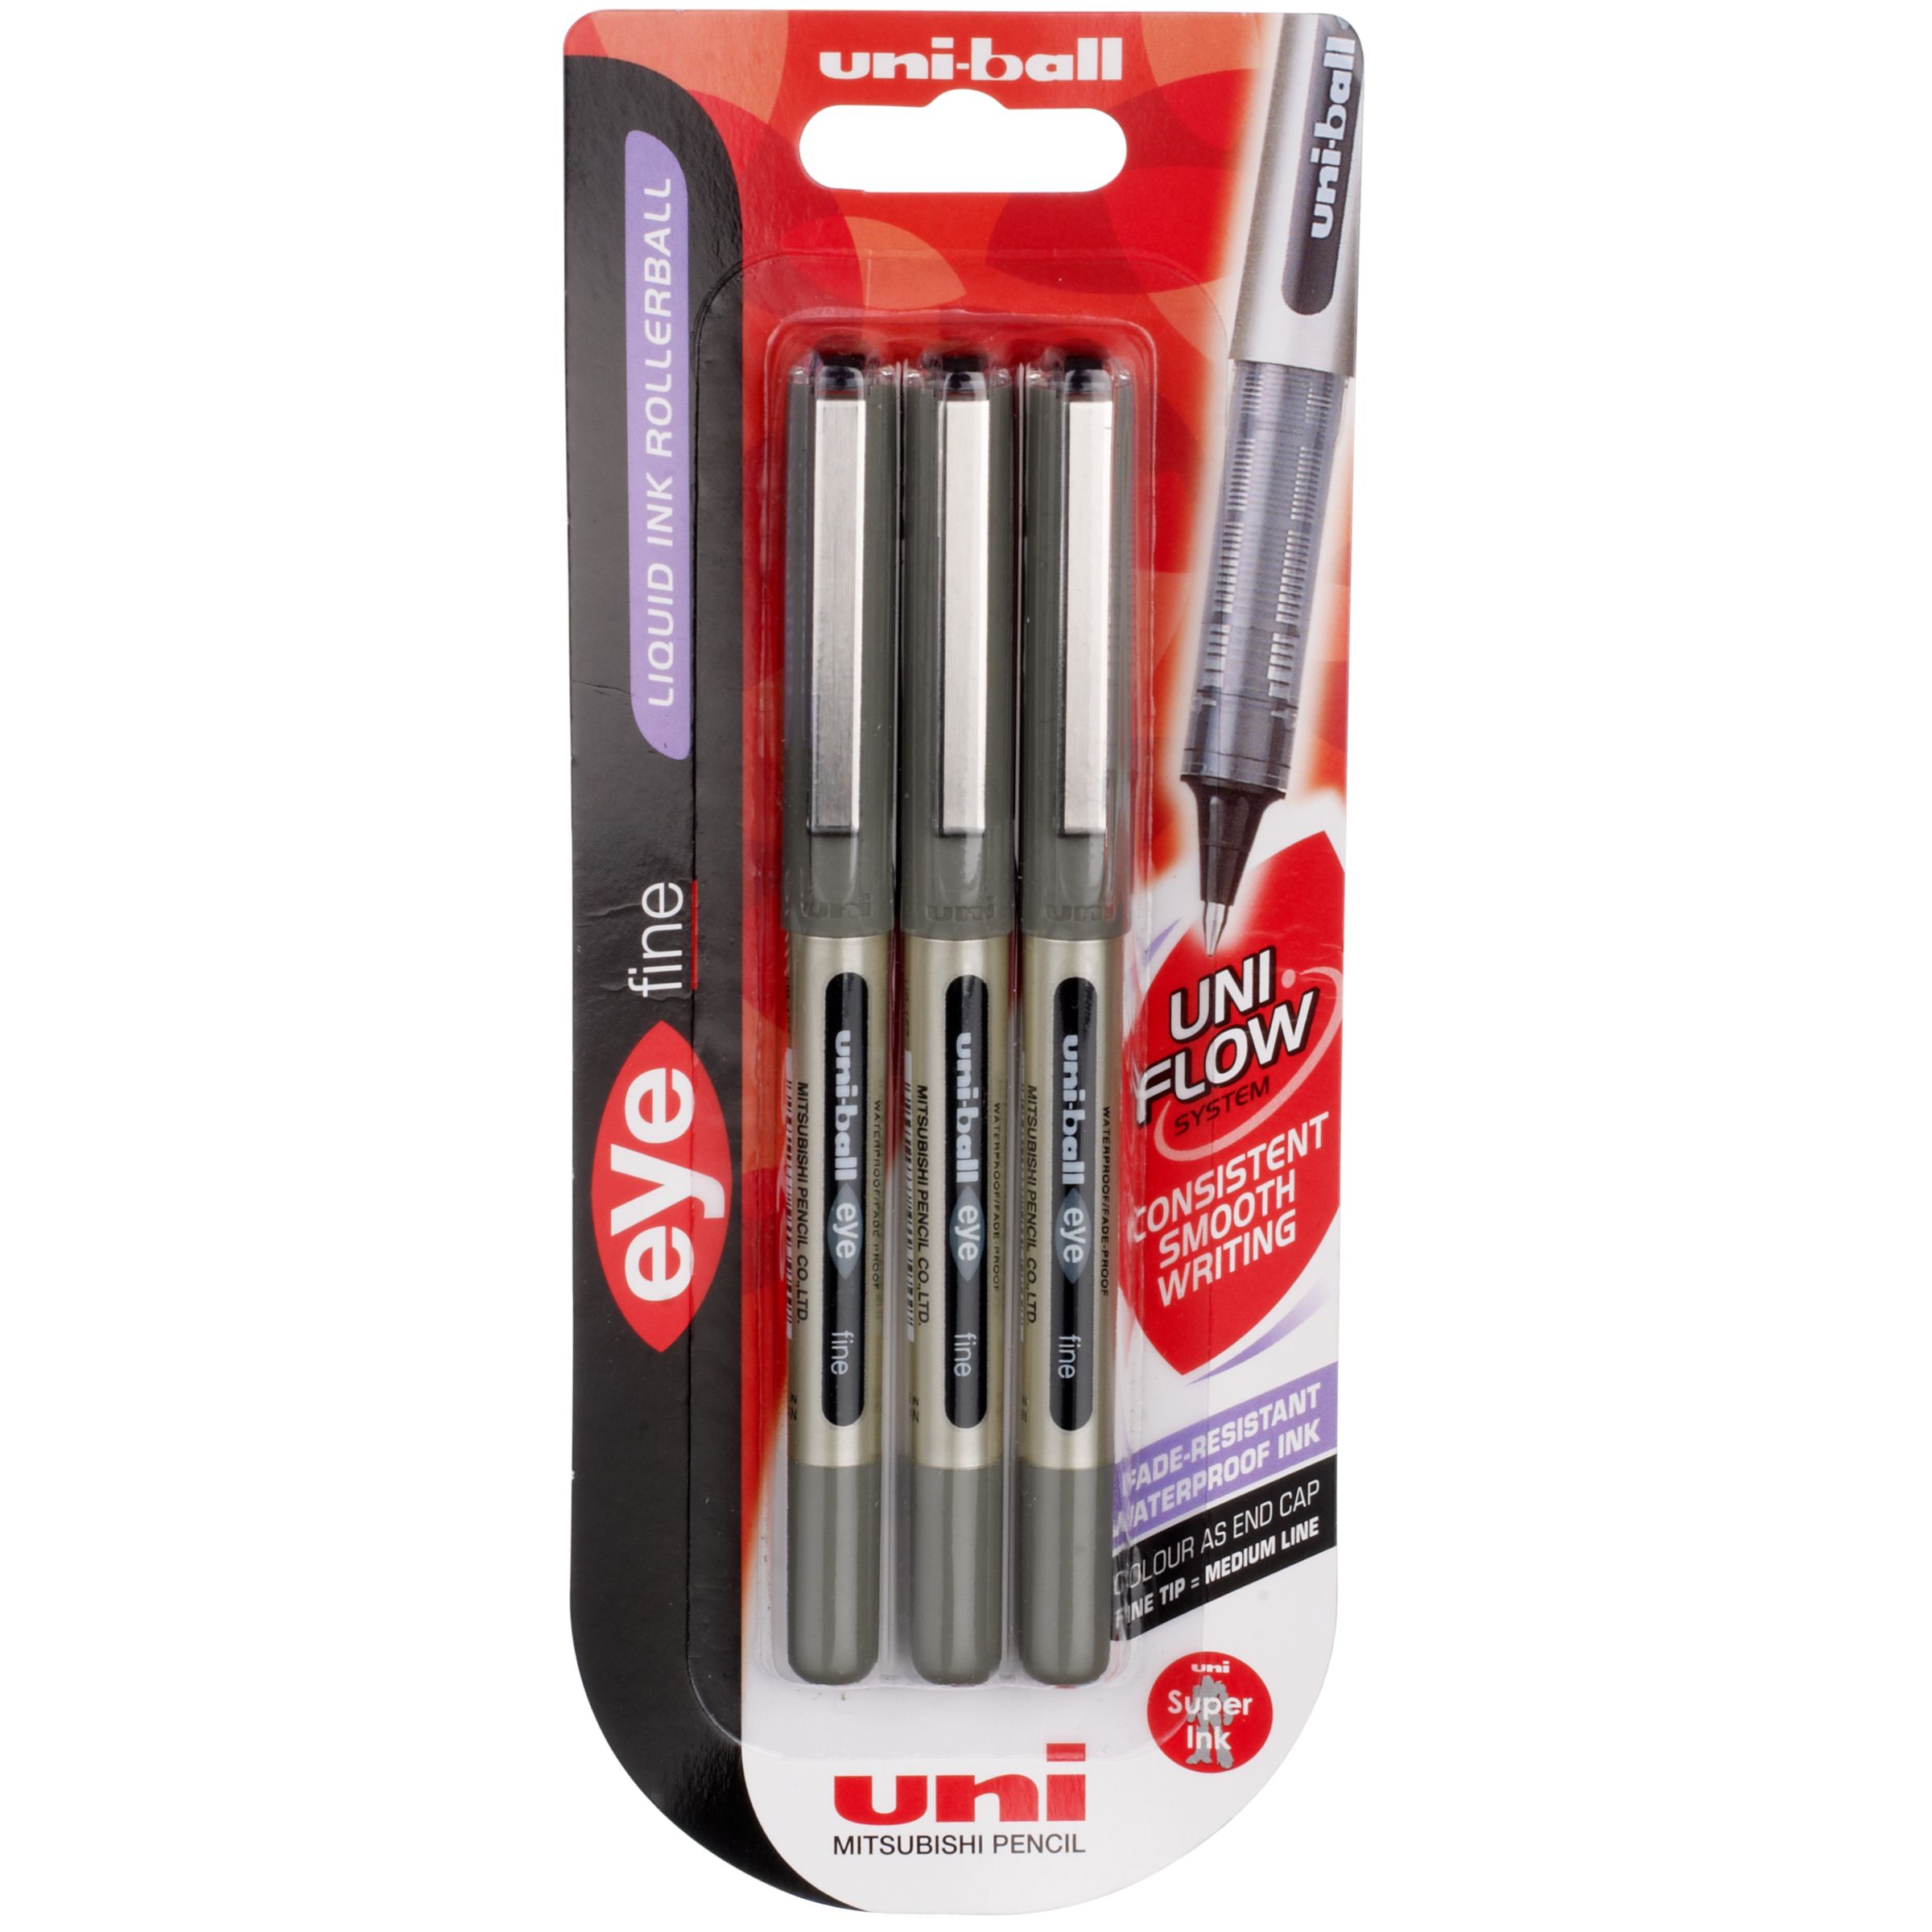 Uniball Uni-Ball Rollerball Pens Pack of 3, Black 170052